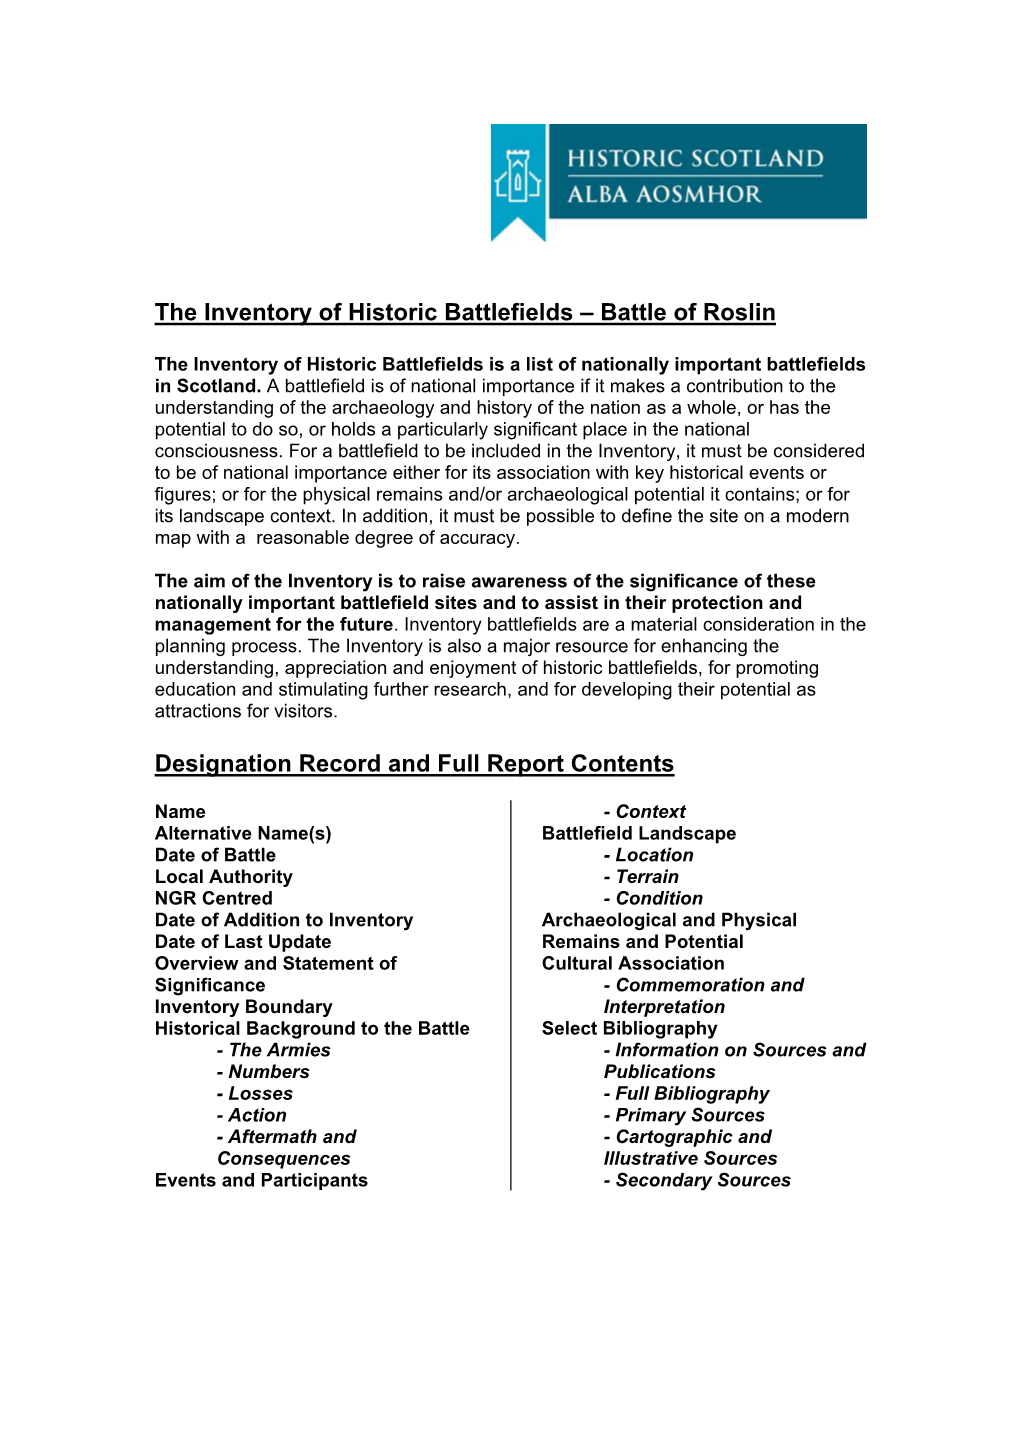 The Inventory of Historic Battlefields – Battle of Roslin Designation Record